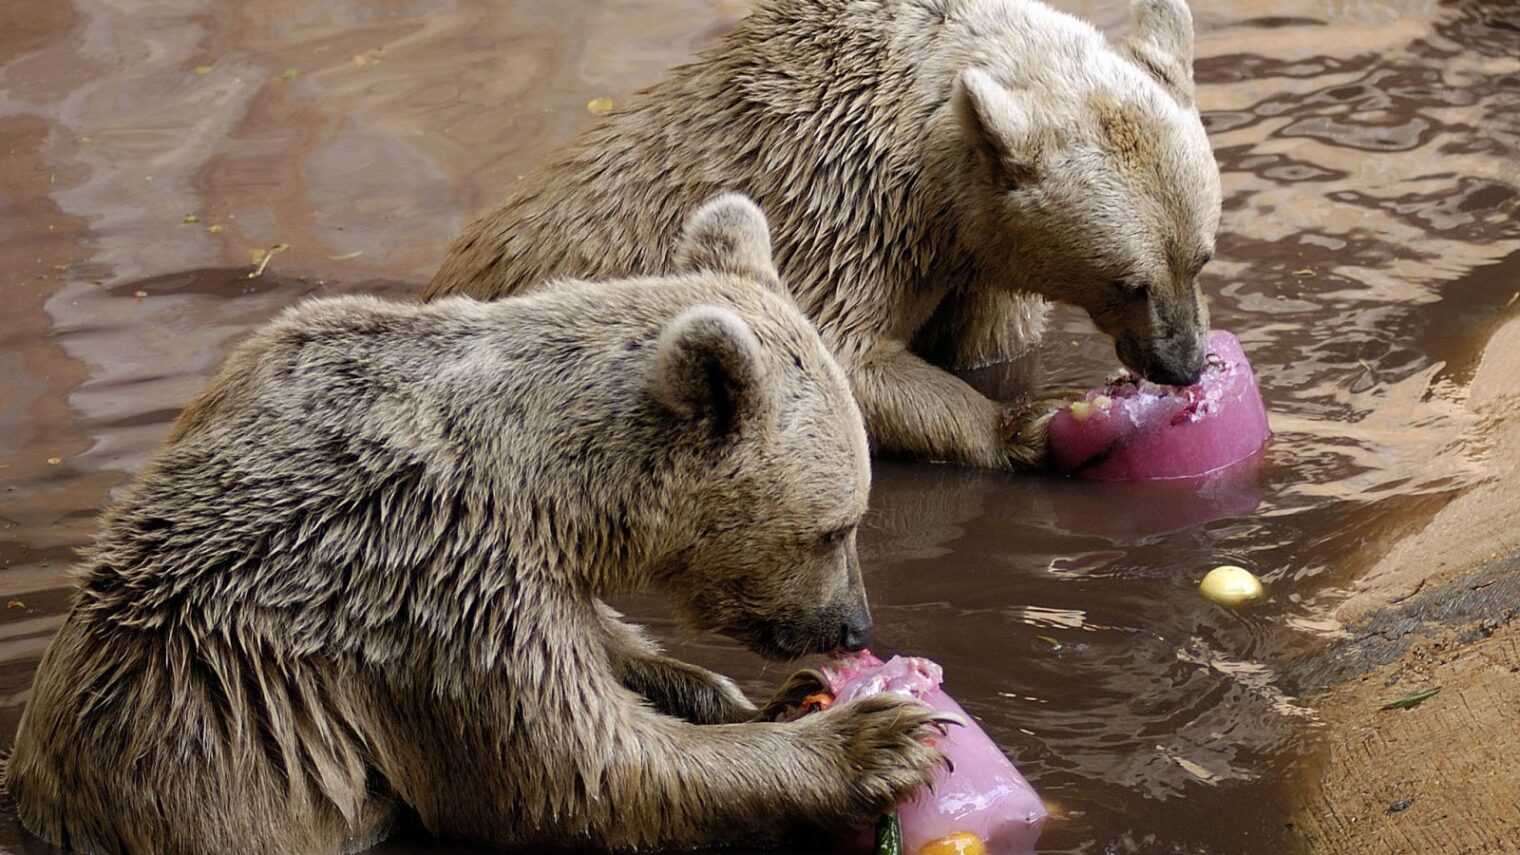 Because when it’s really hot in Israel, the bears at the Ramat Gan Safari Park get icy treats. Photo courtesy of Ramat Gan Safari